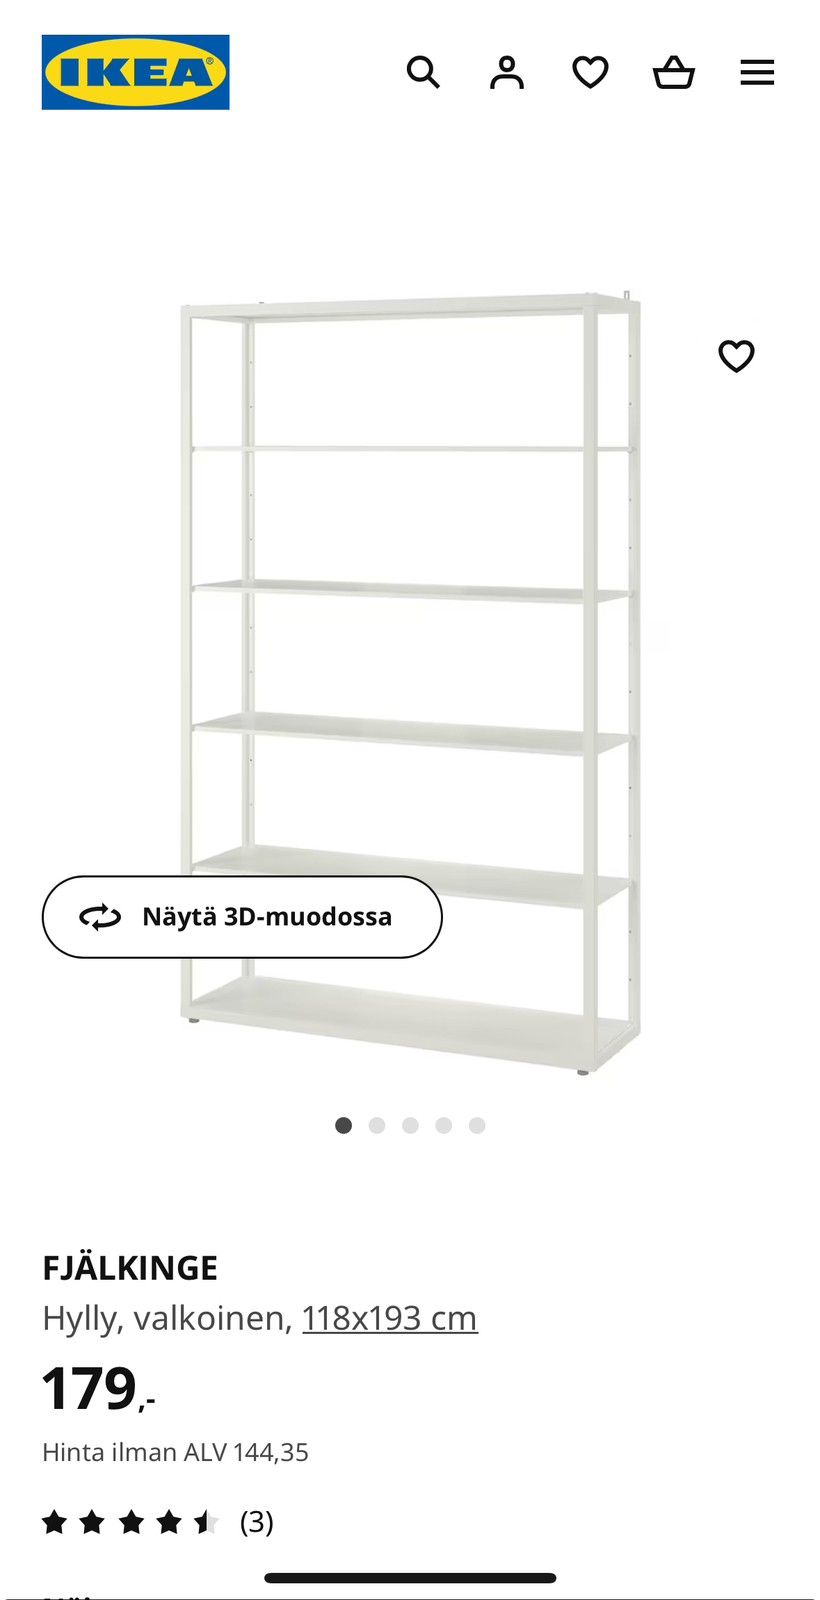 Ikea fjälkinge hylly